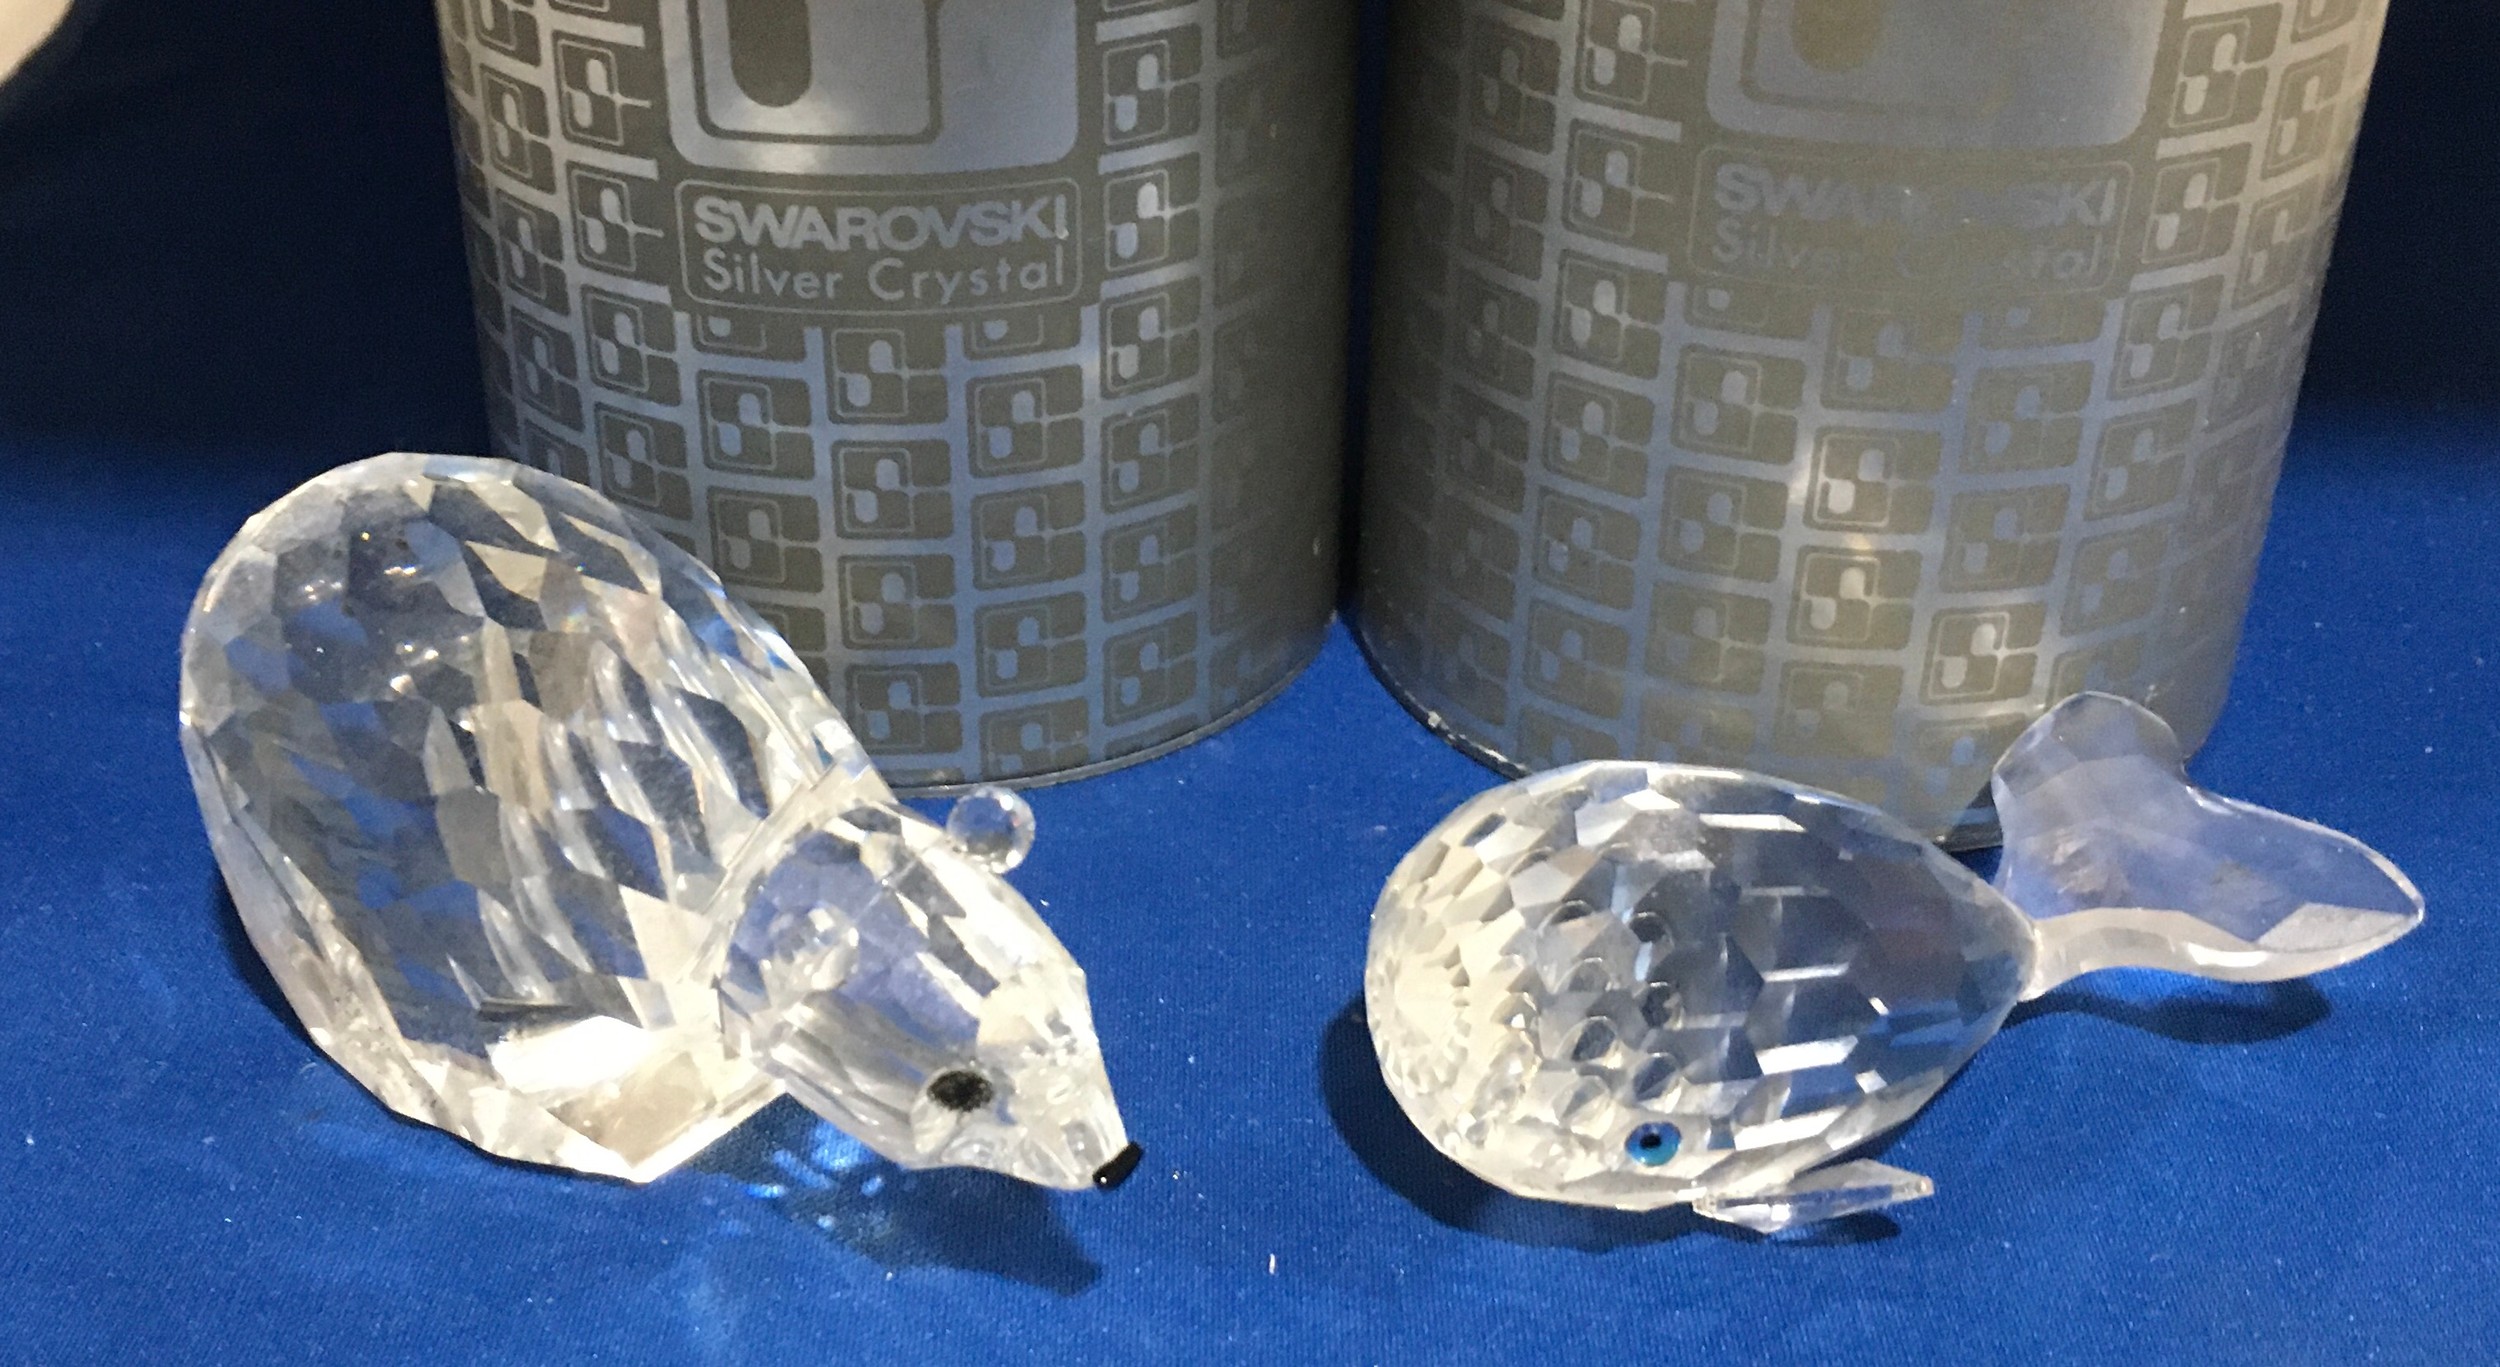 Swarovski silver crystal figures Polar bear 010377, Penguin 7643nr08500, Whale 7628nr080000, - Image 3 of 3